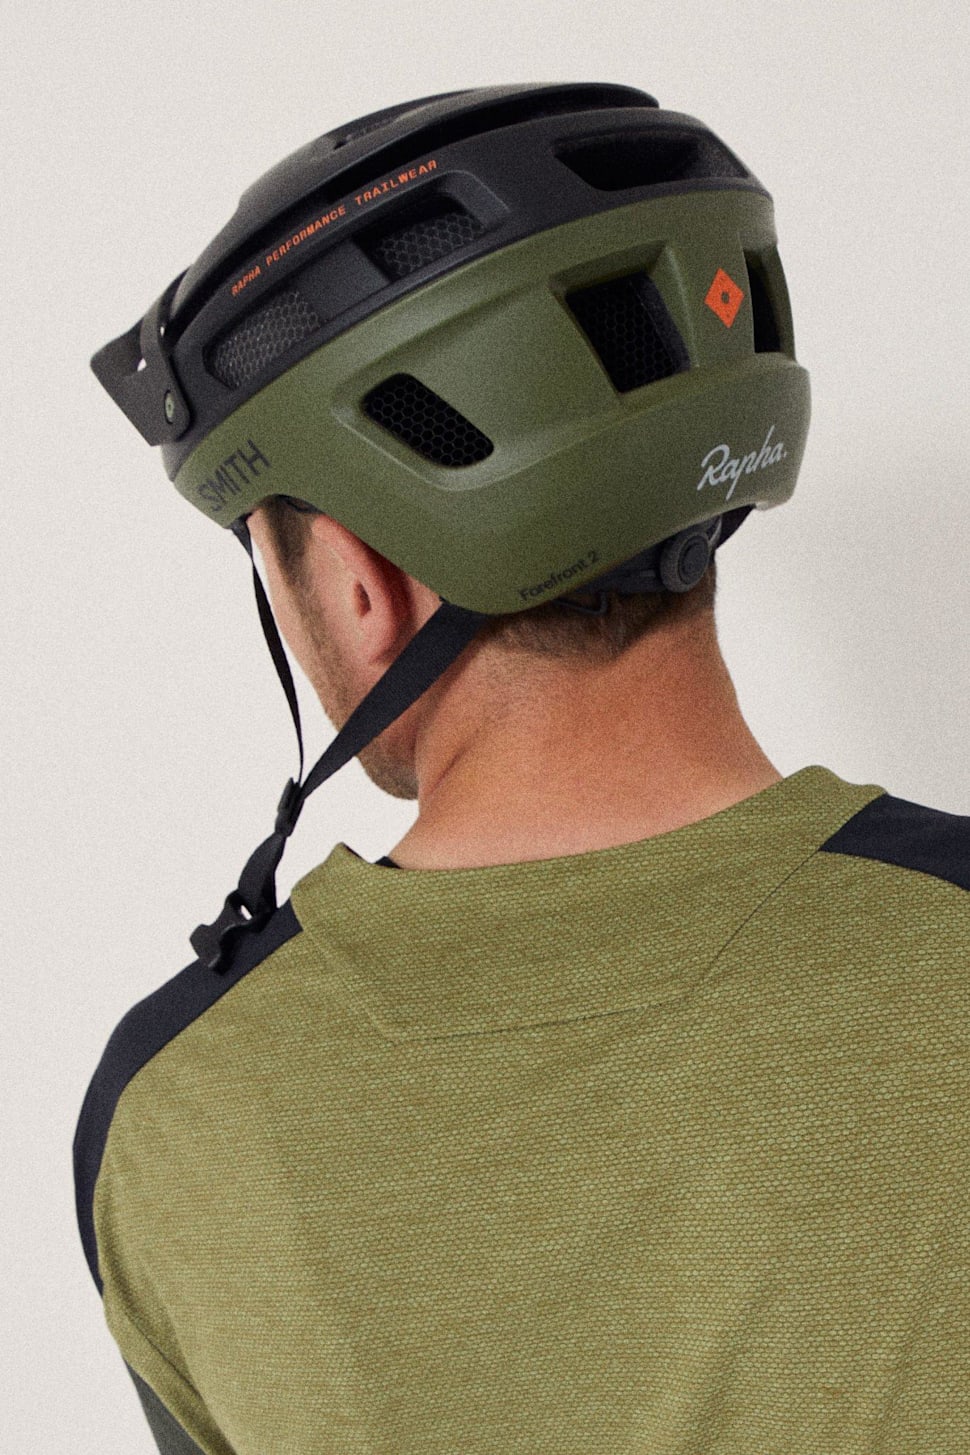 Rapha x Smith Forefront 2 MTB Trail Helmet (EU/UK) | Rapha